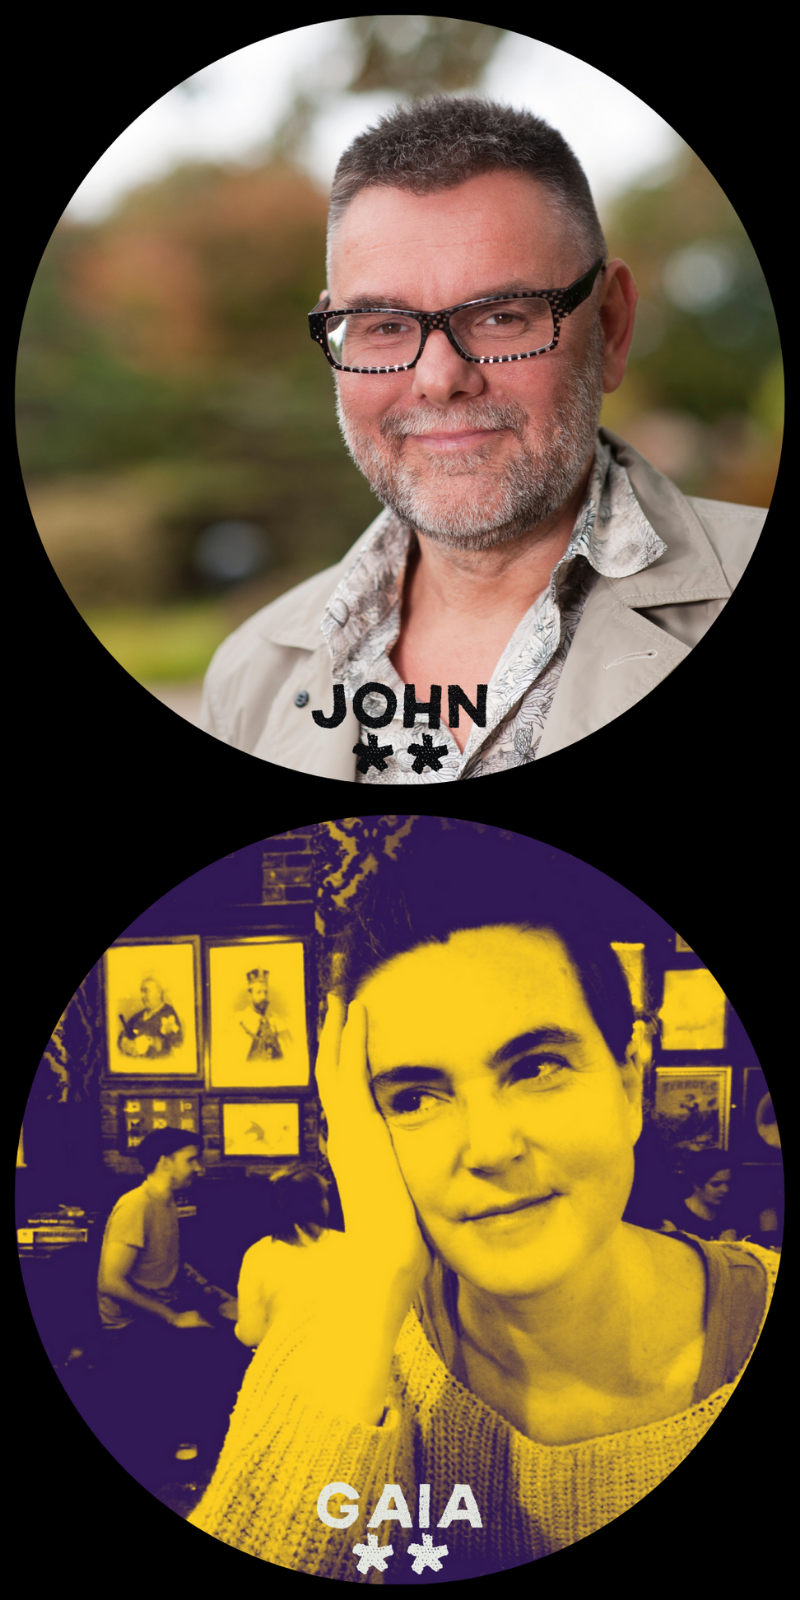 John & Gaia Profiles